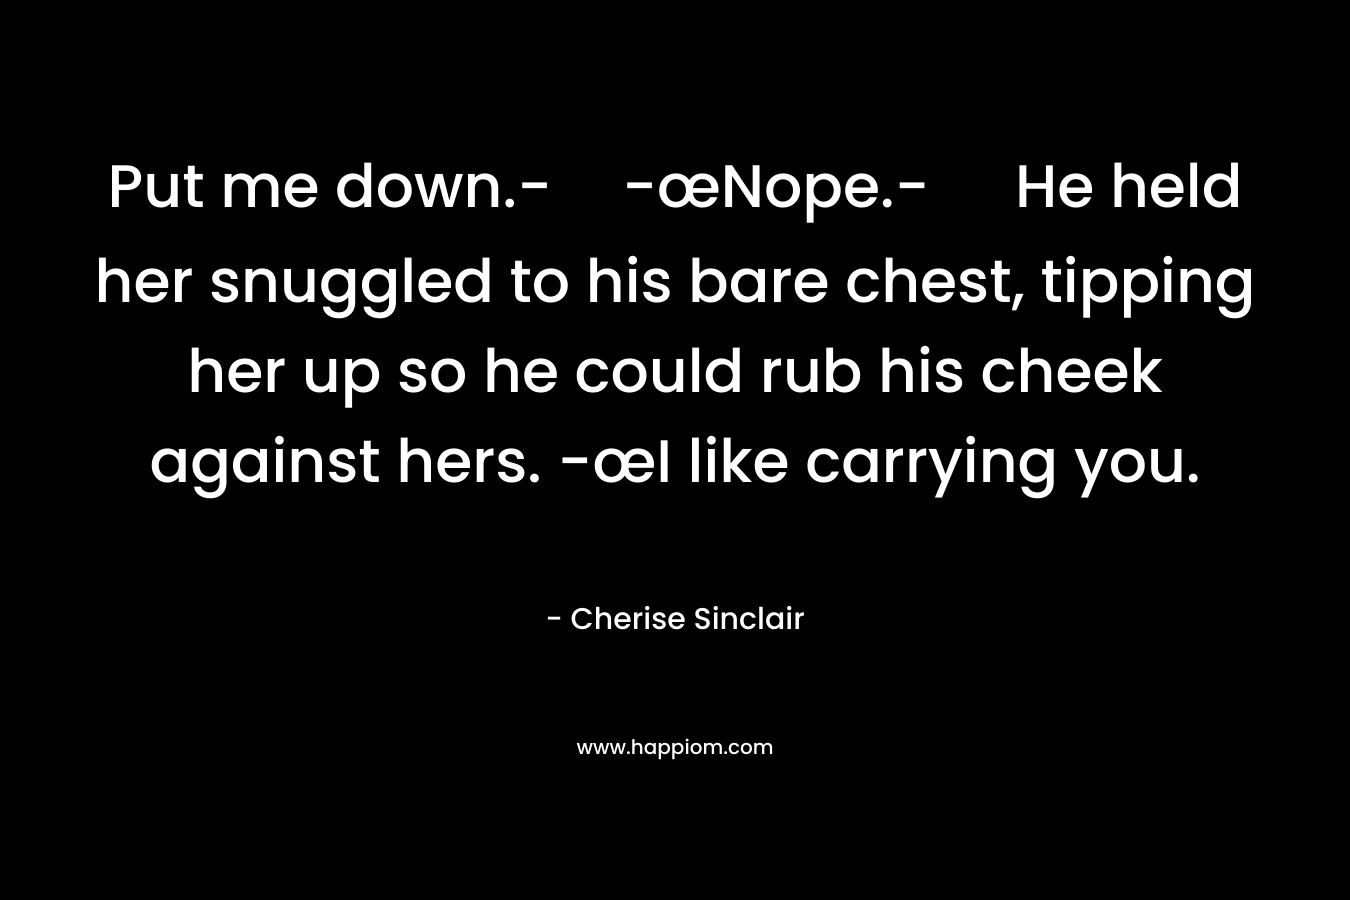 Put me down.--œNope.- He held her snuggled to his bare chest, tipping her up so he could rub his cheek against hers. -œI like carrying you. – Cherise Sinclair